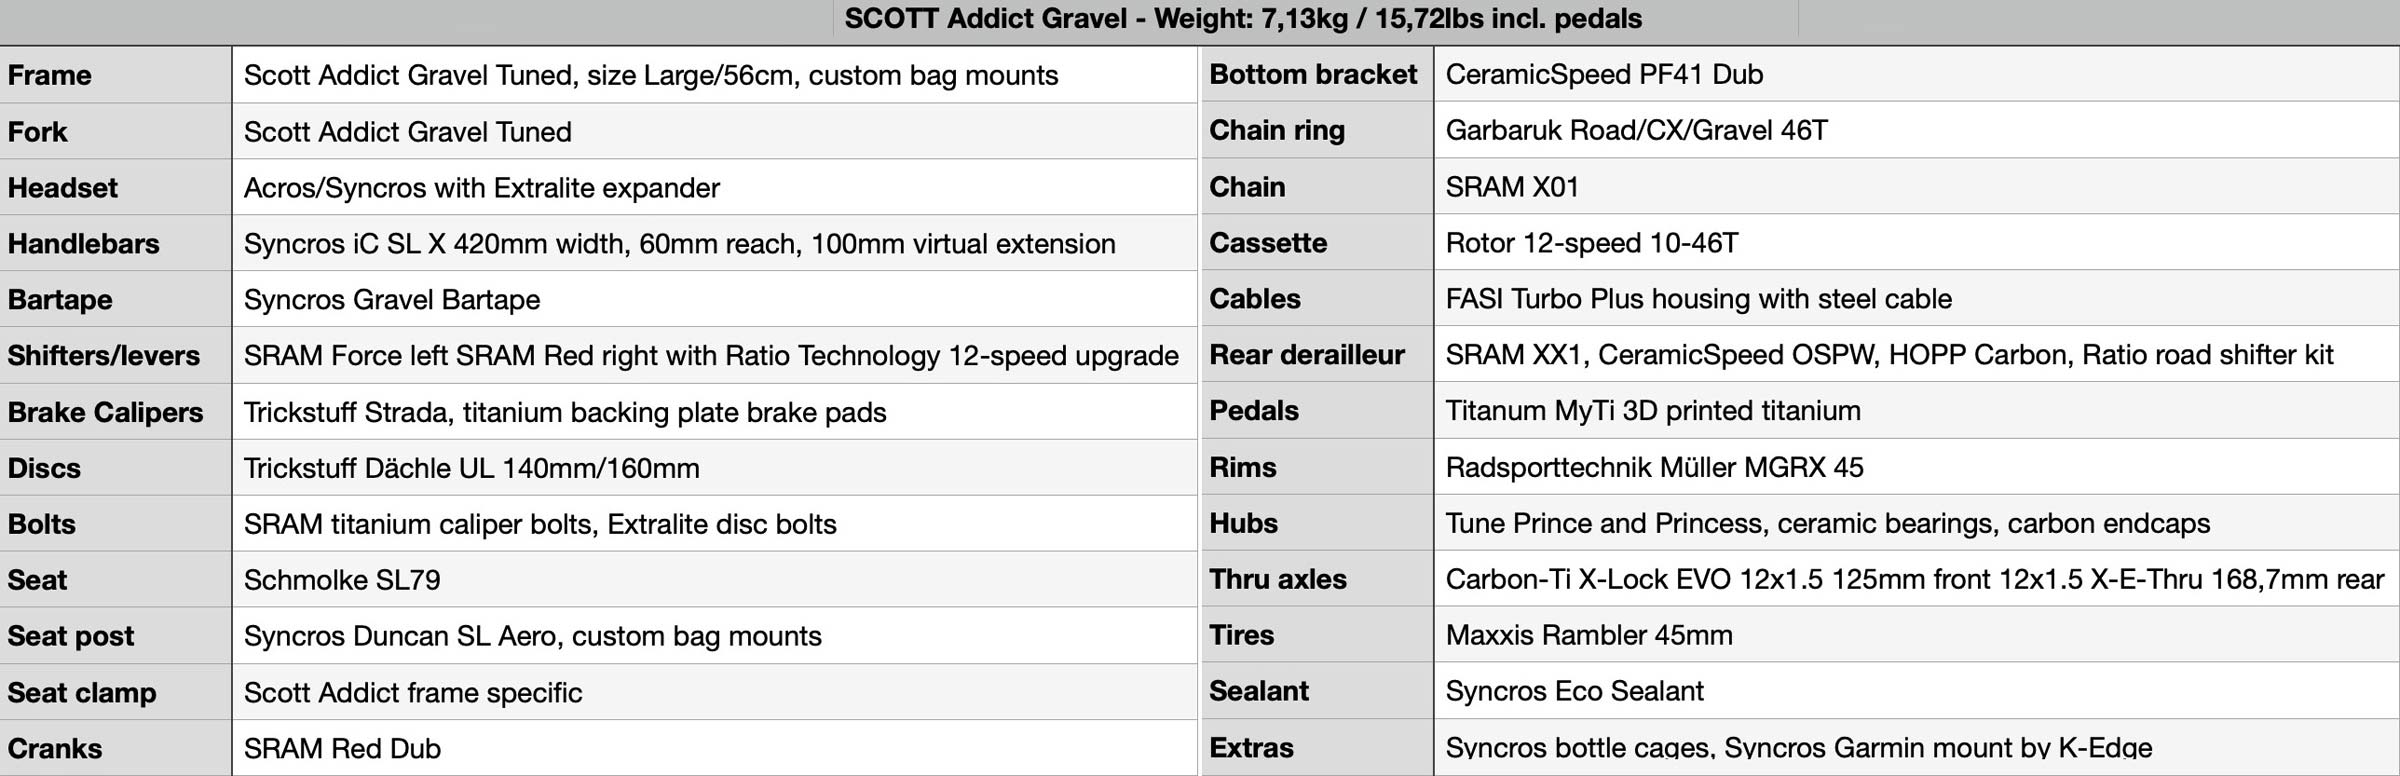 custom Scott Addict Gravel Tuned Dangerholm edition lightweight carbon prototype gravel bike project, tech specs